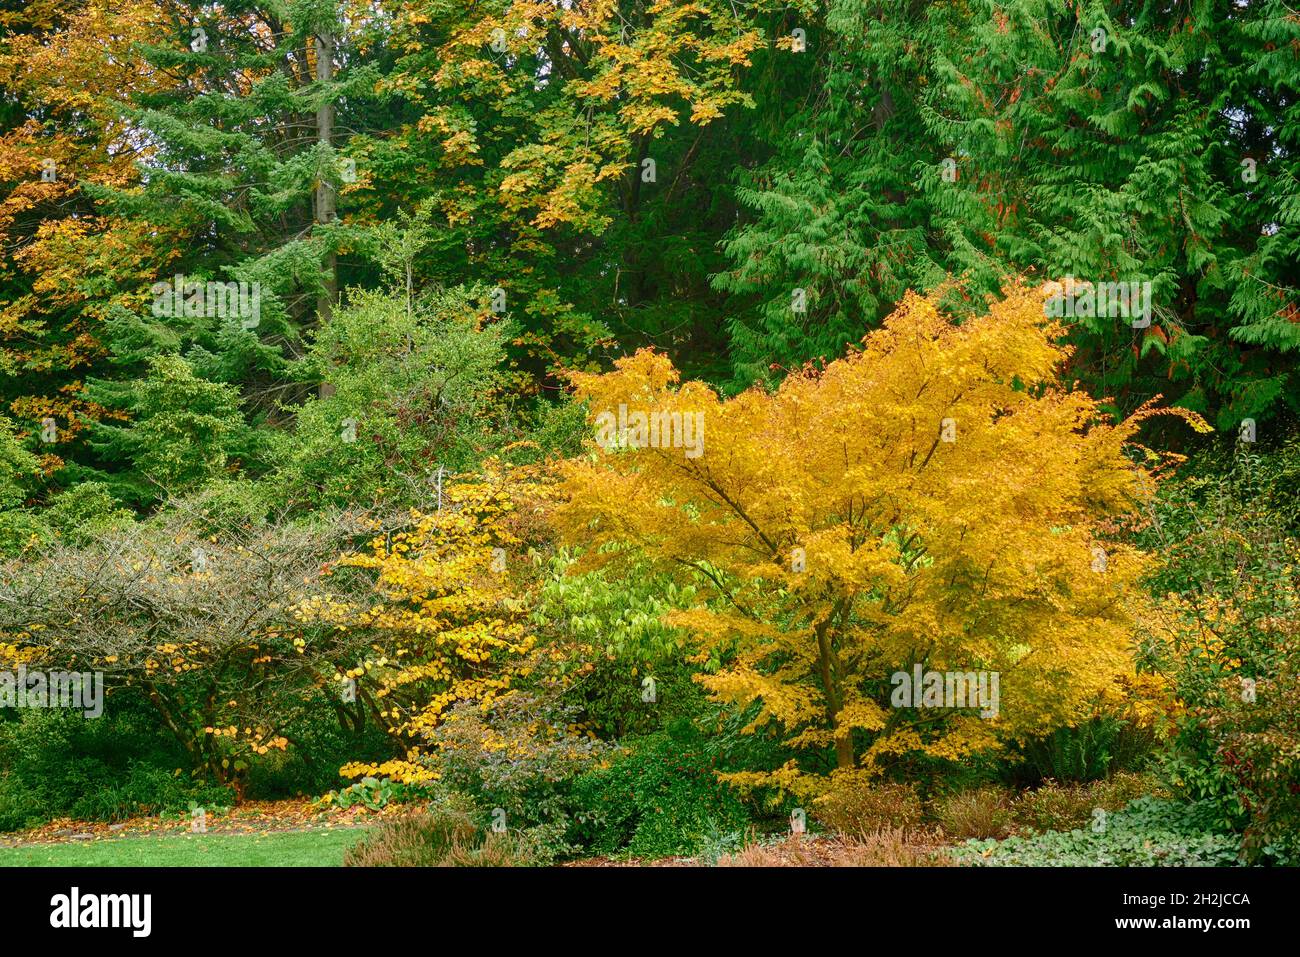 Colorful foliage on the trees in the autumn park, Eastern Washington, USA Stock Photo